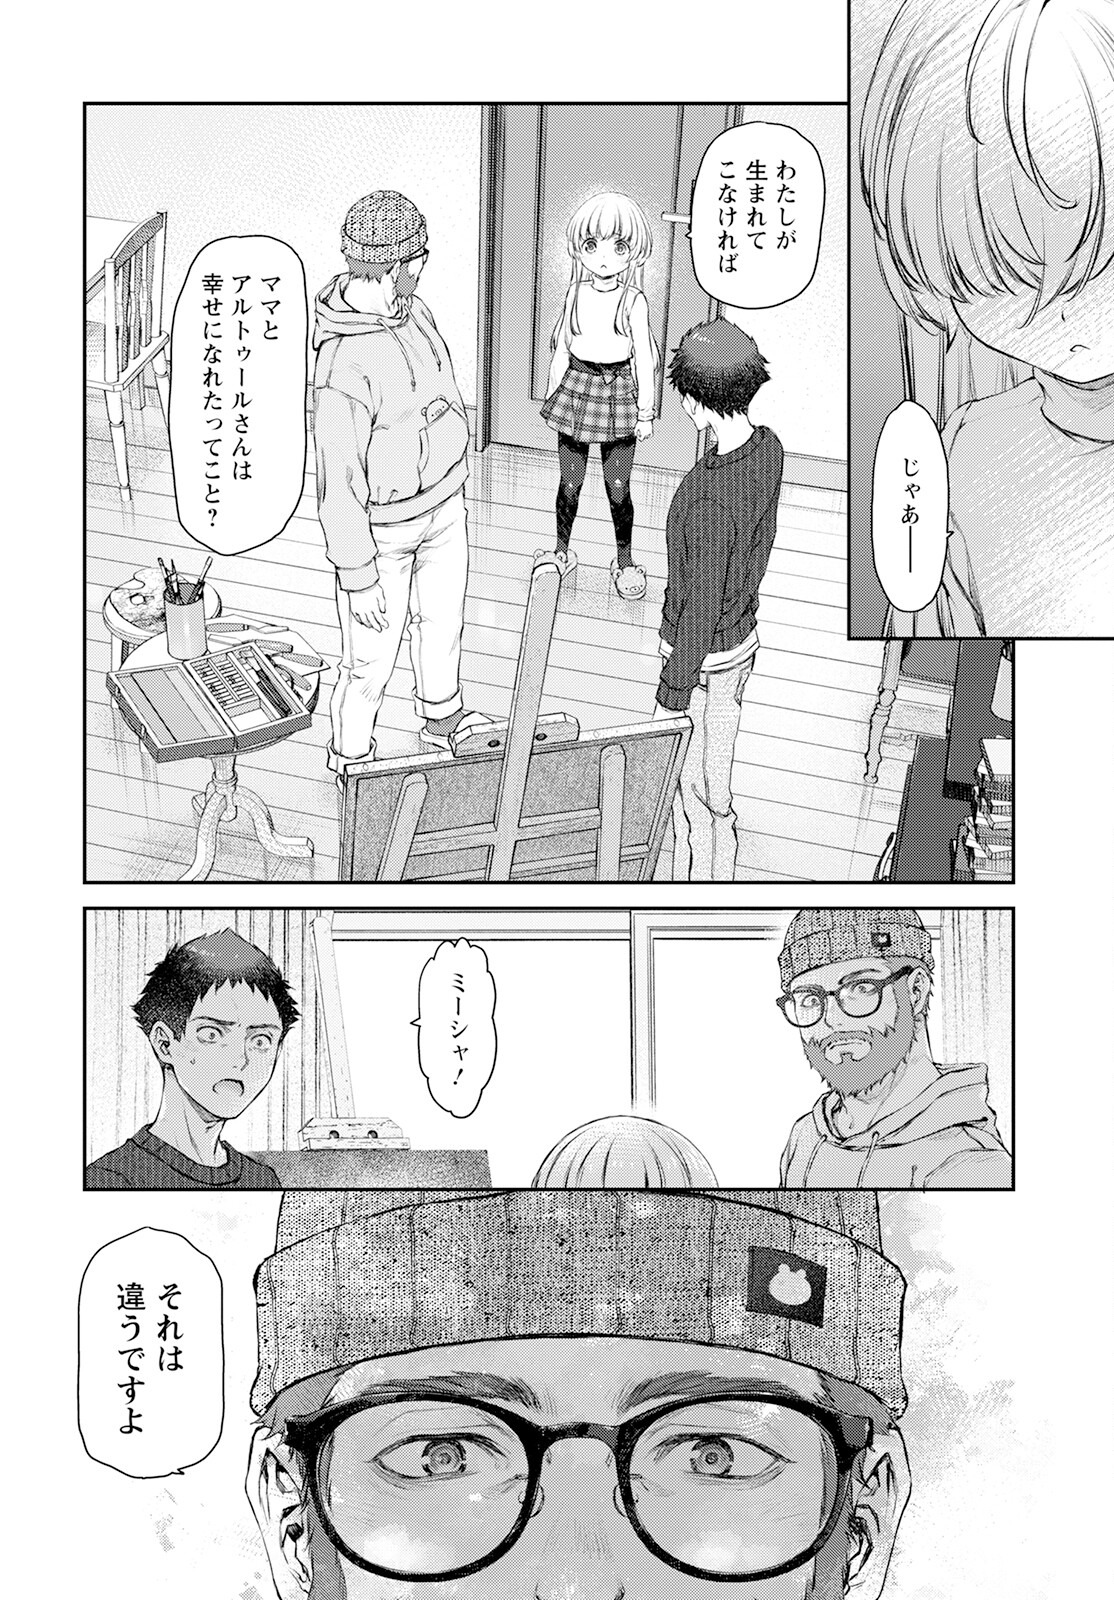 Uchi no Maid ga Uzasugiru! - Chapter 58 - Page 2